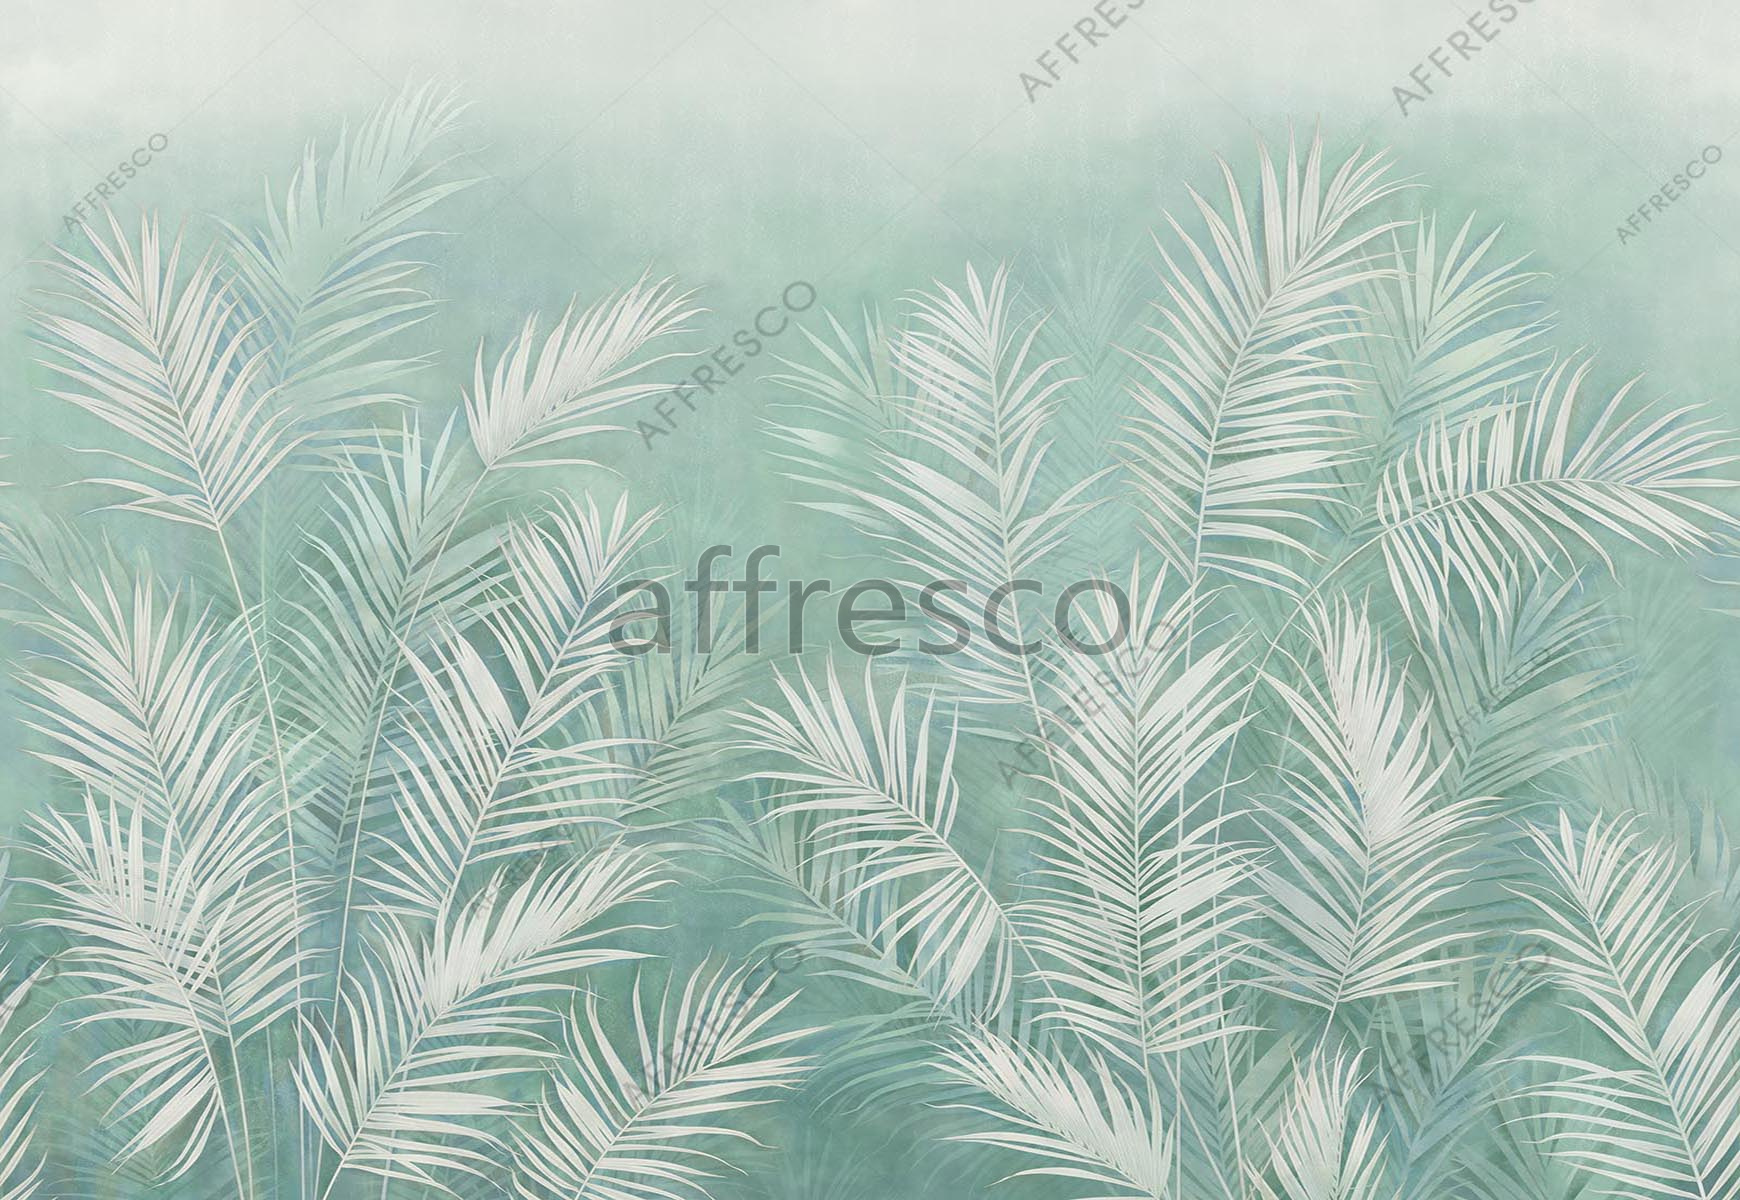 ID139144 | Textures | Malibu foliage | Affresco Factory